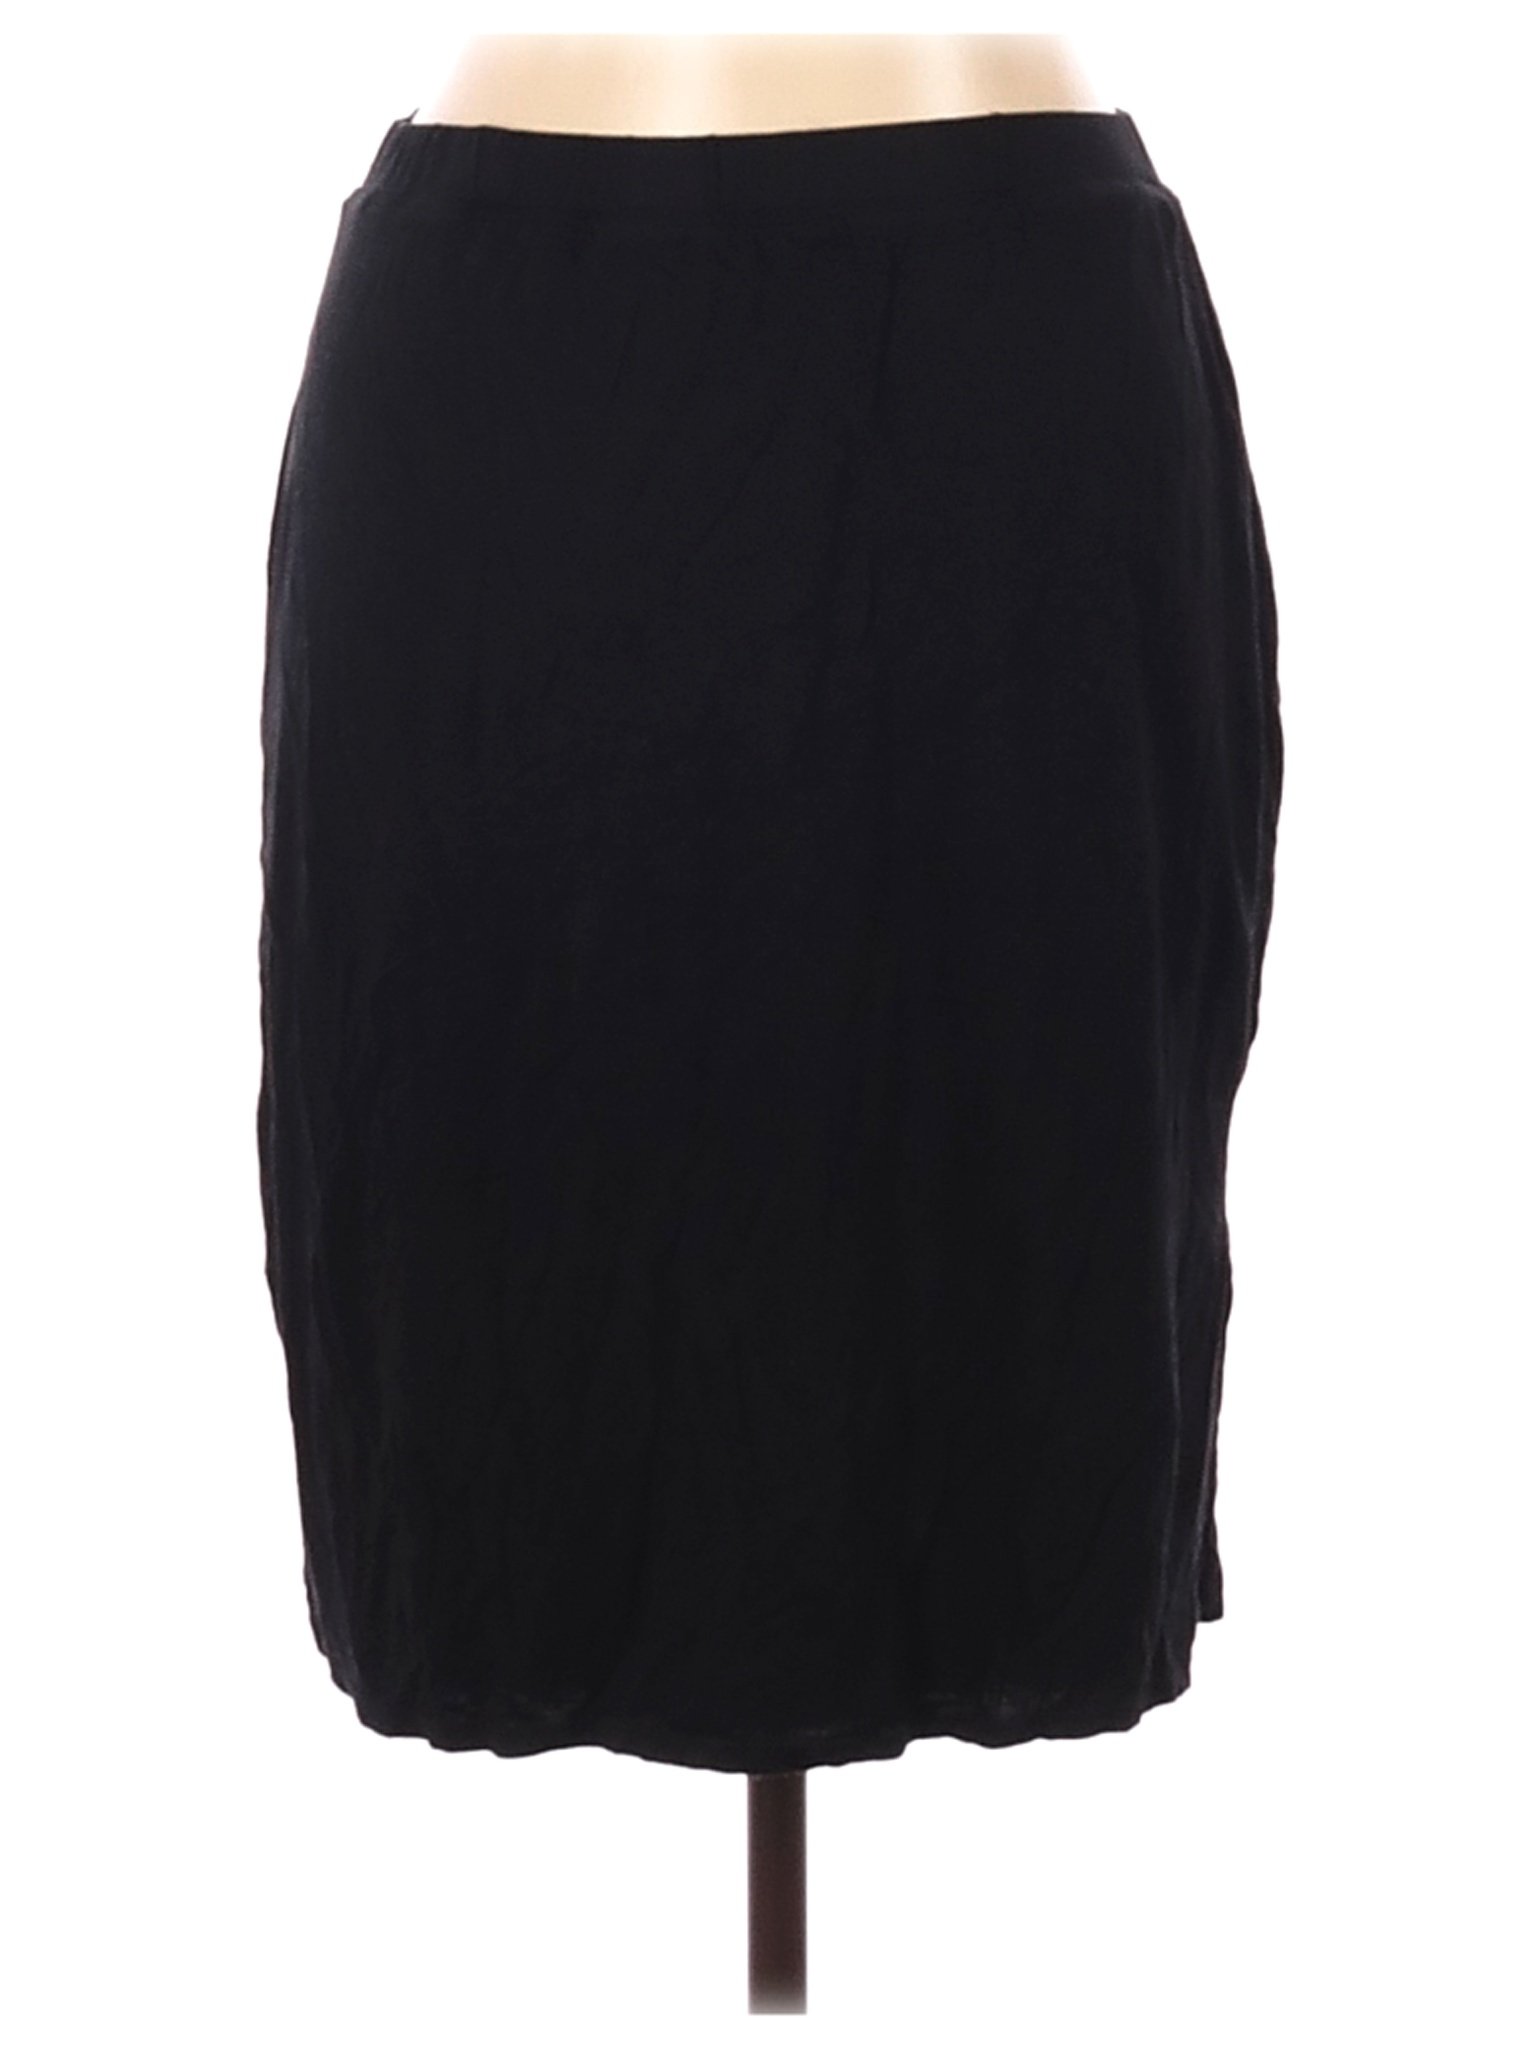 Max Studio Women Black Casual Skirt L | eBay